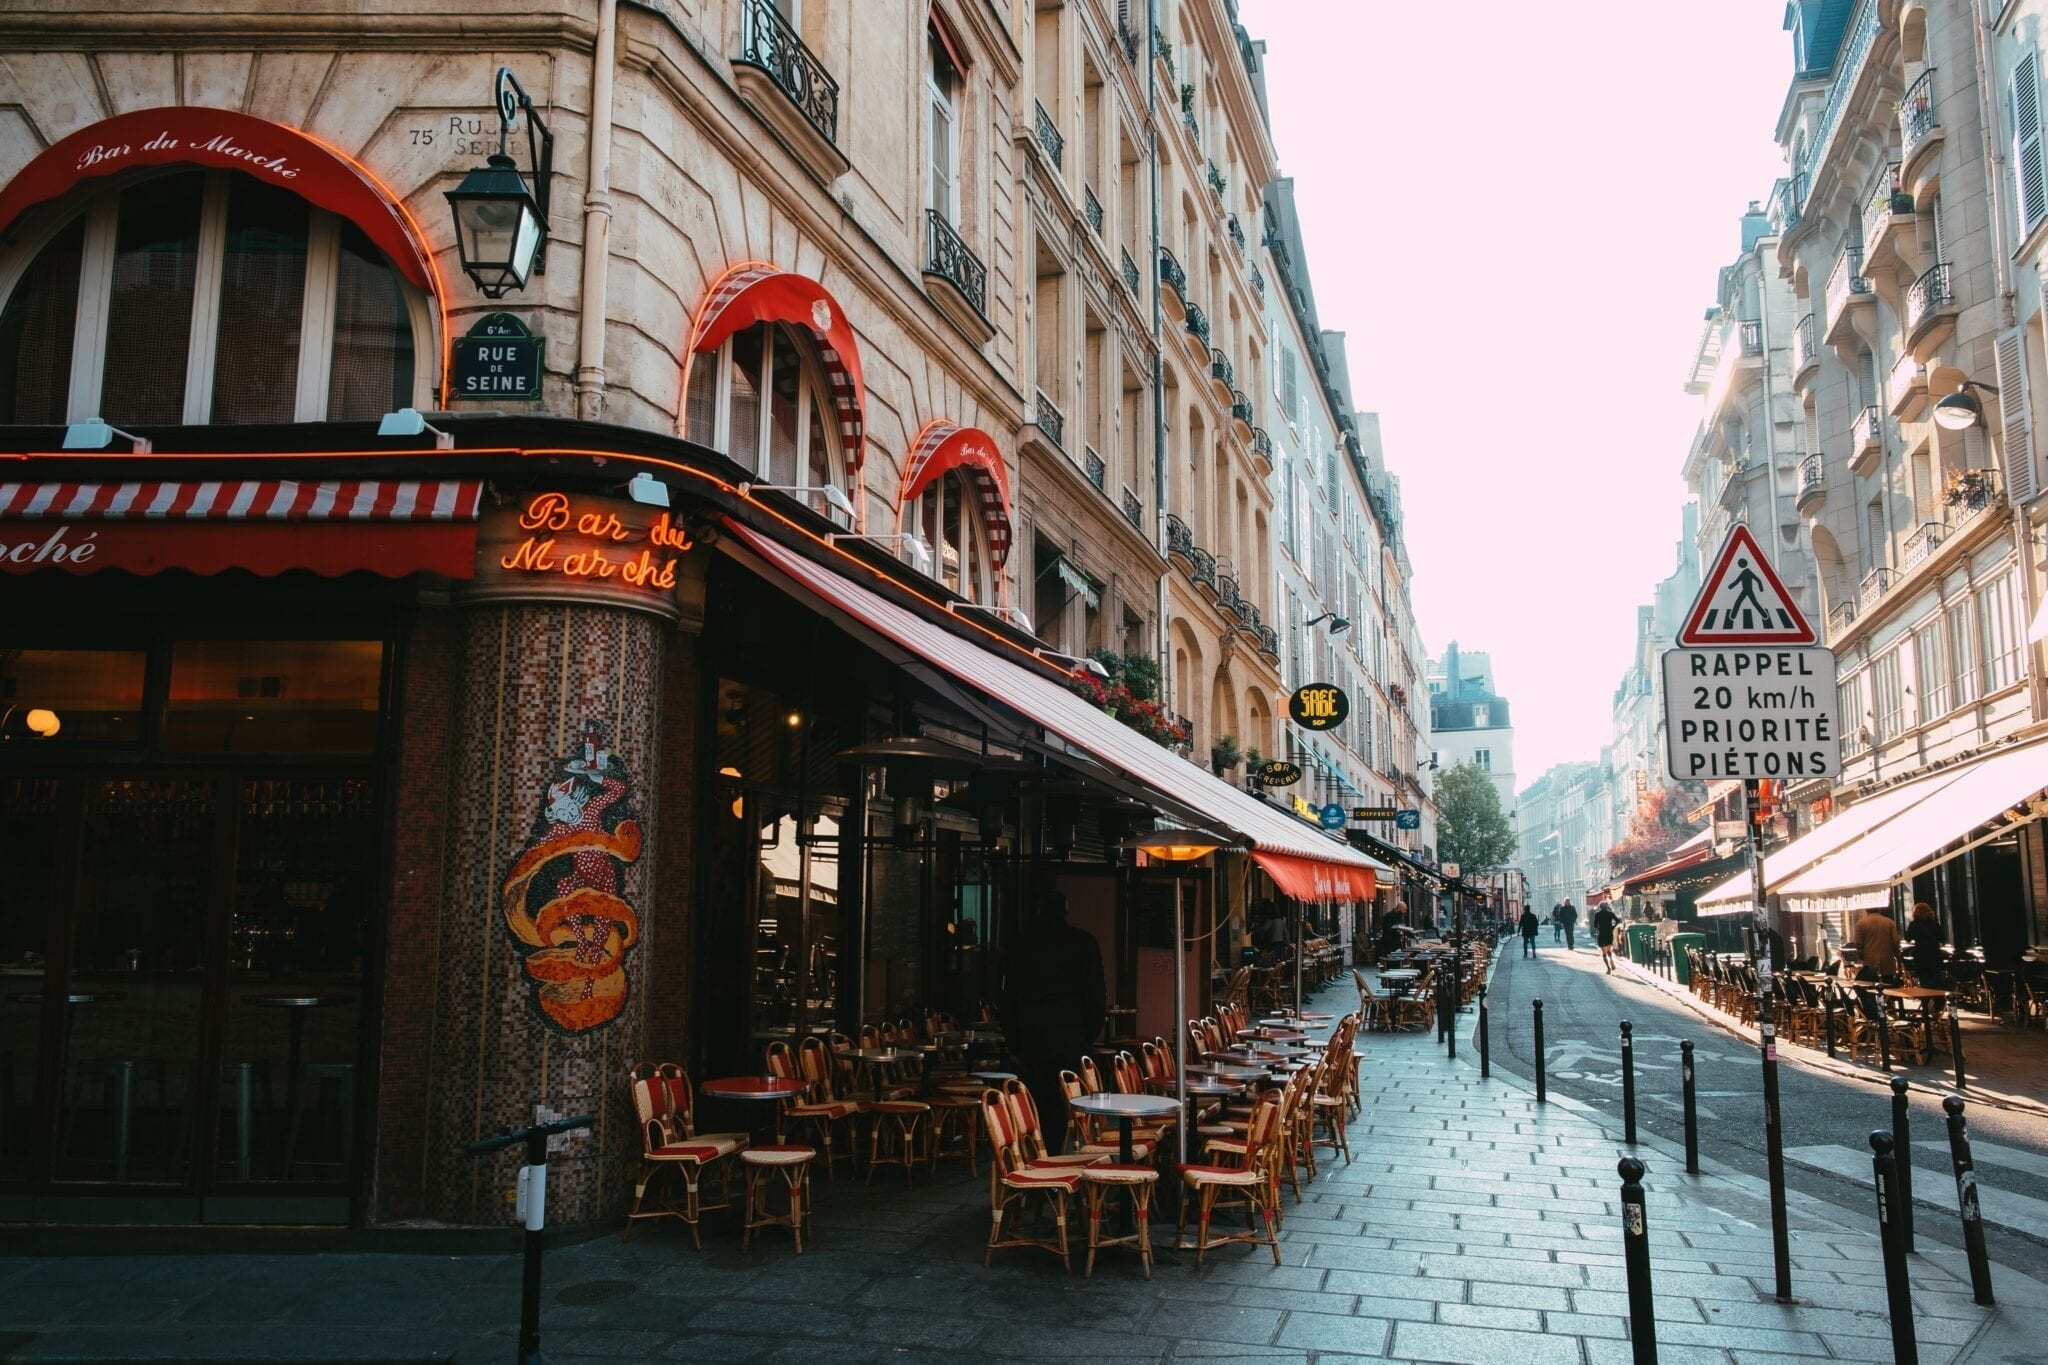 Parisian streets and cafe. Photo by Caleb Maxwell.